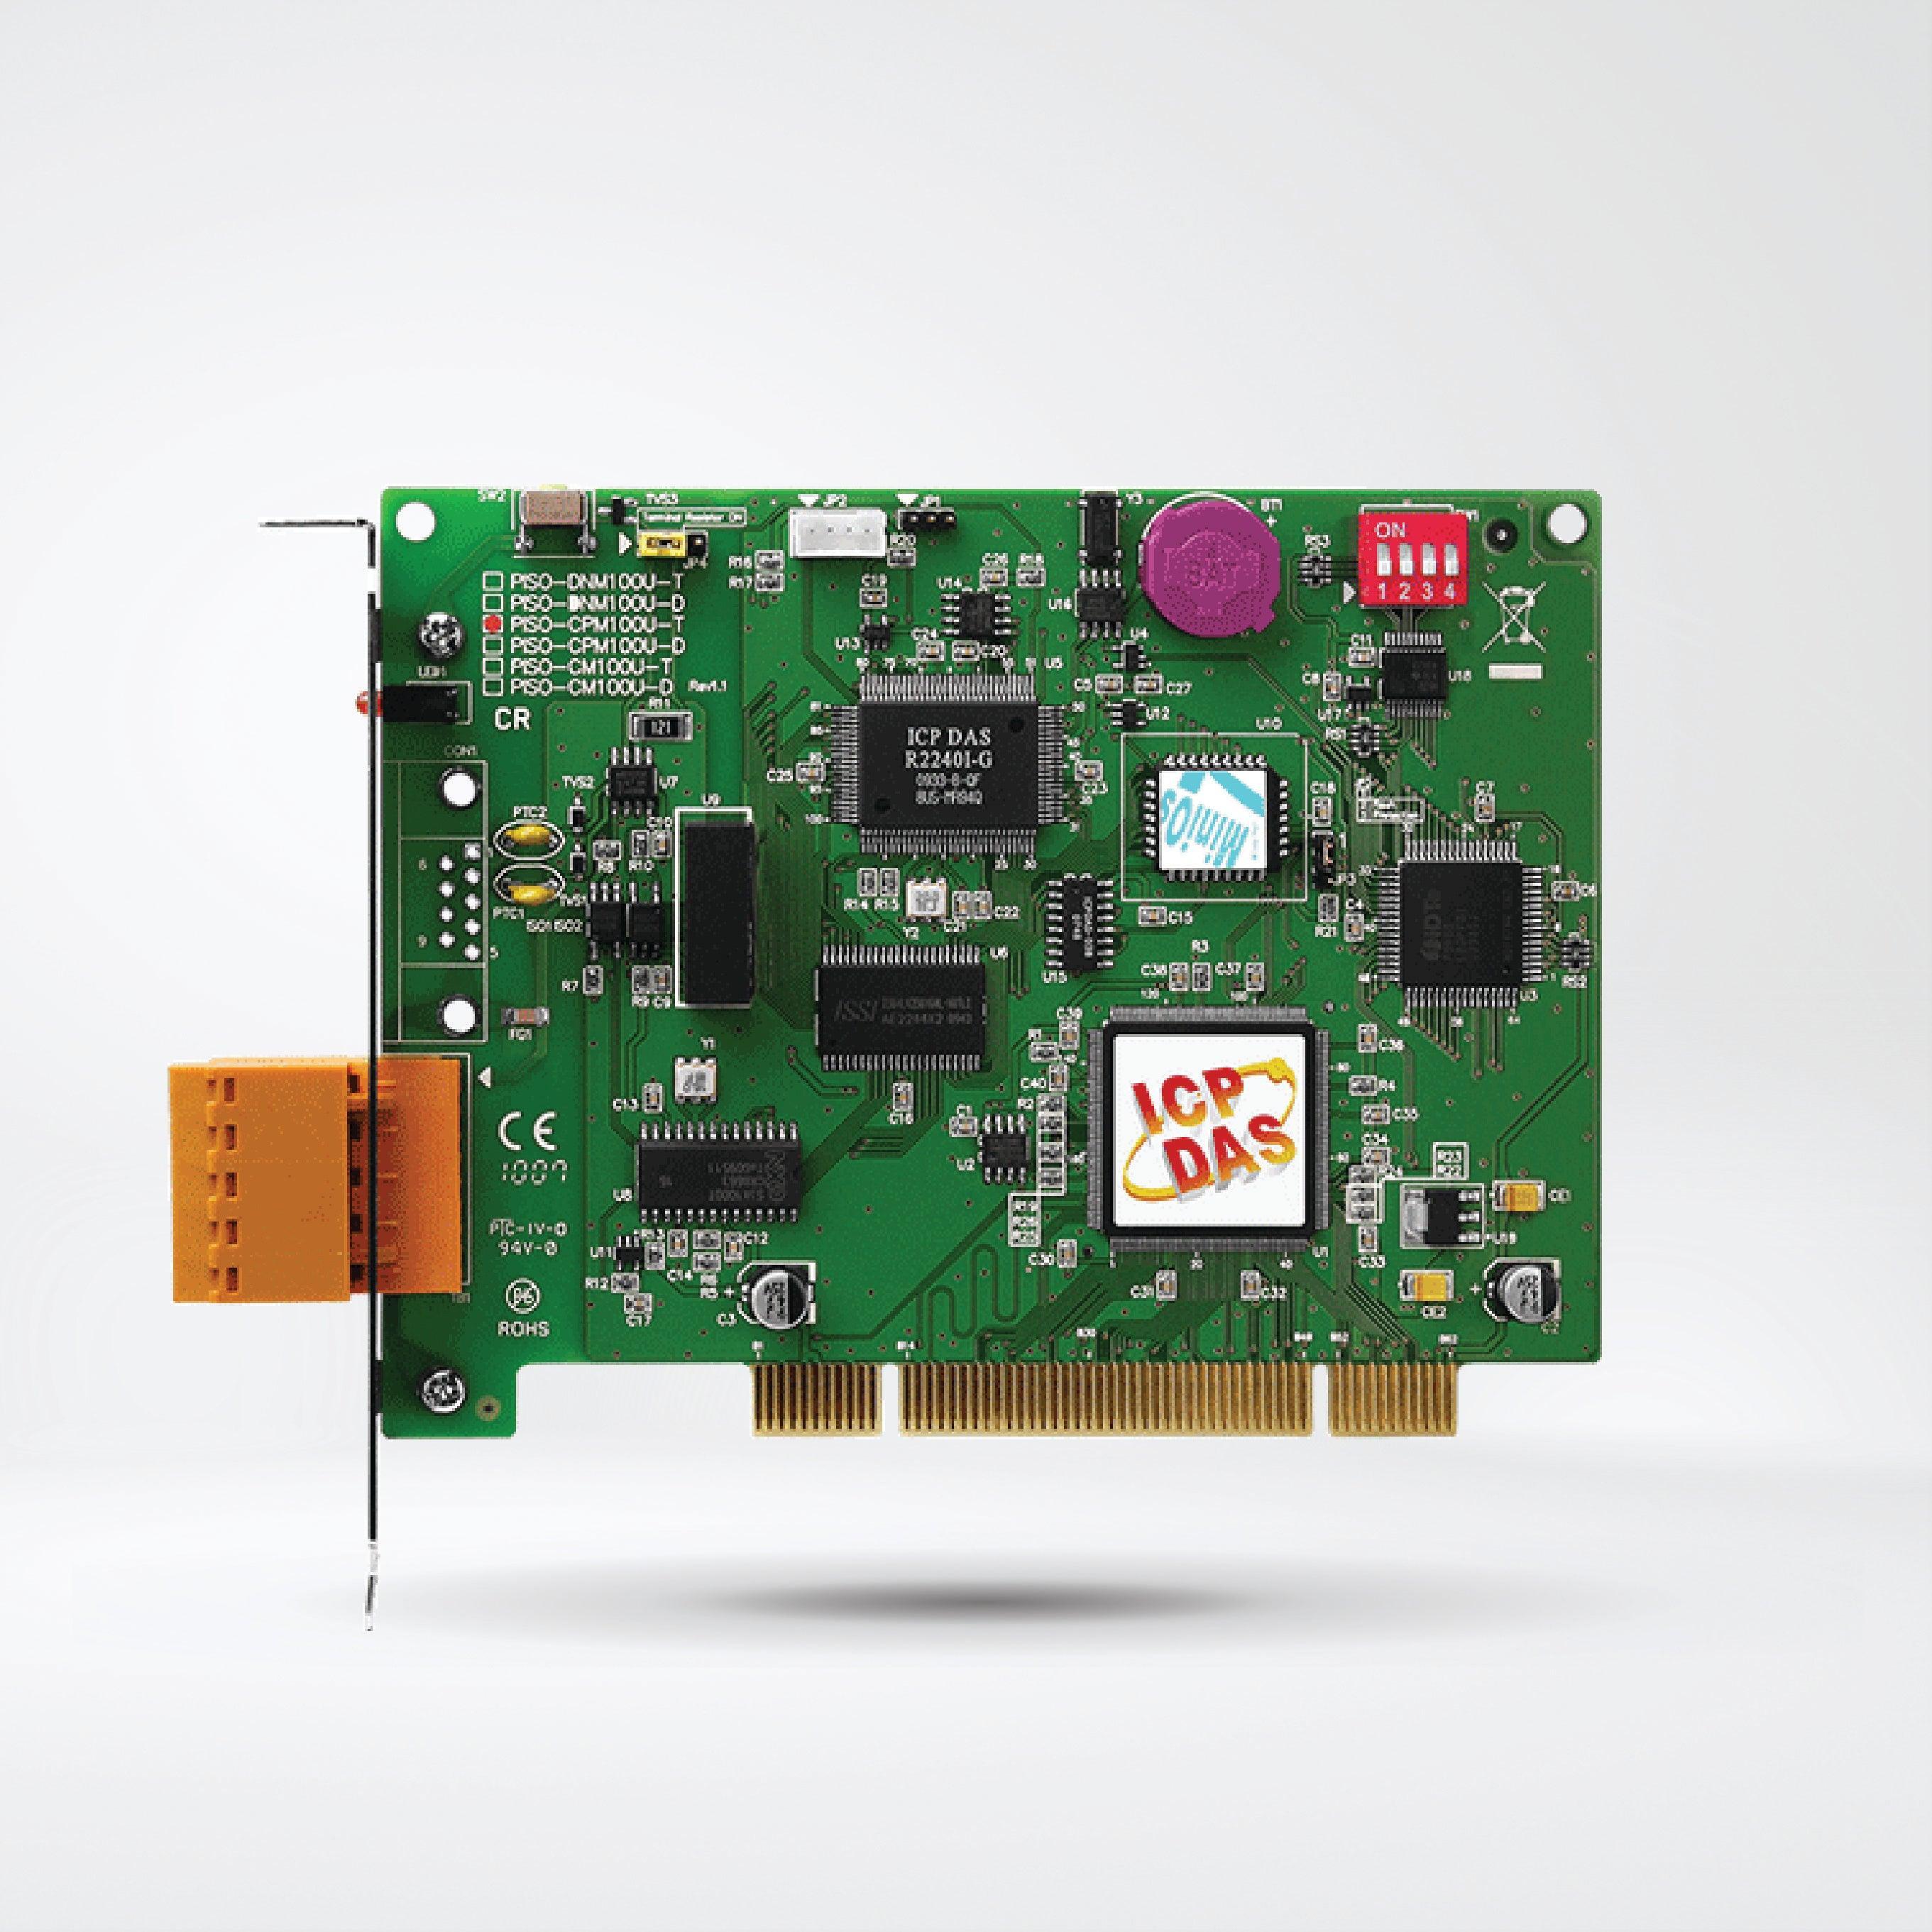 PISO-CPM100U-T 1 Port Intelligent CANopen Master Universal PCI Board - Riverplus